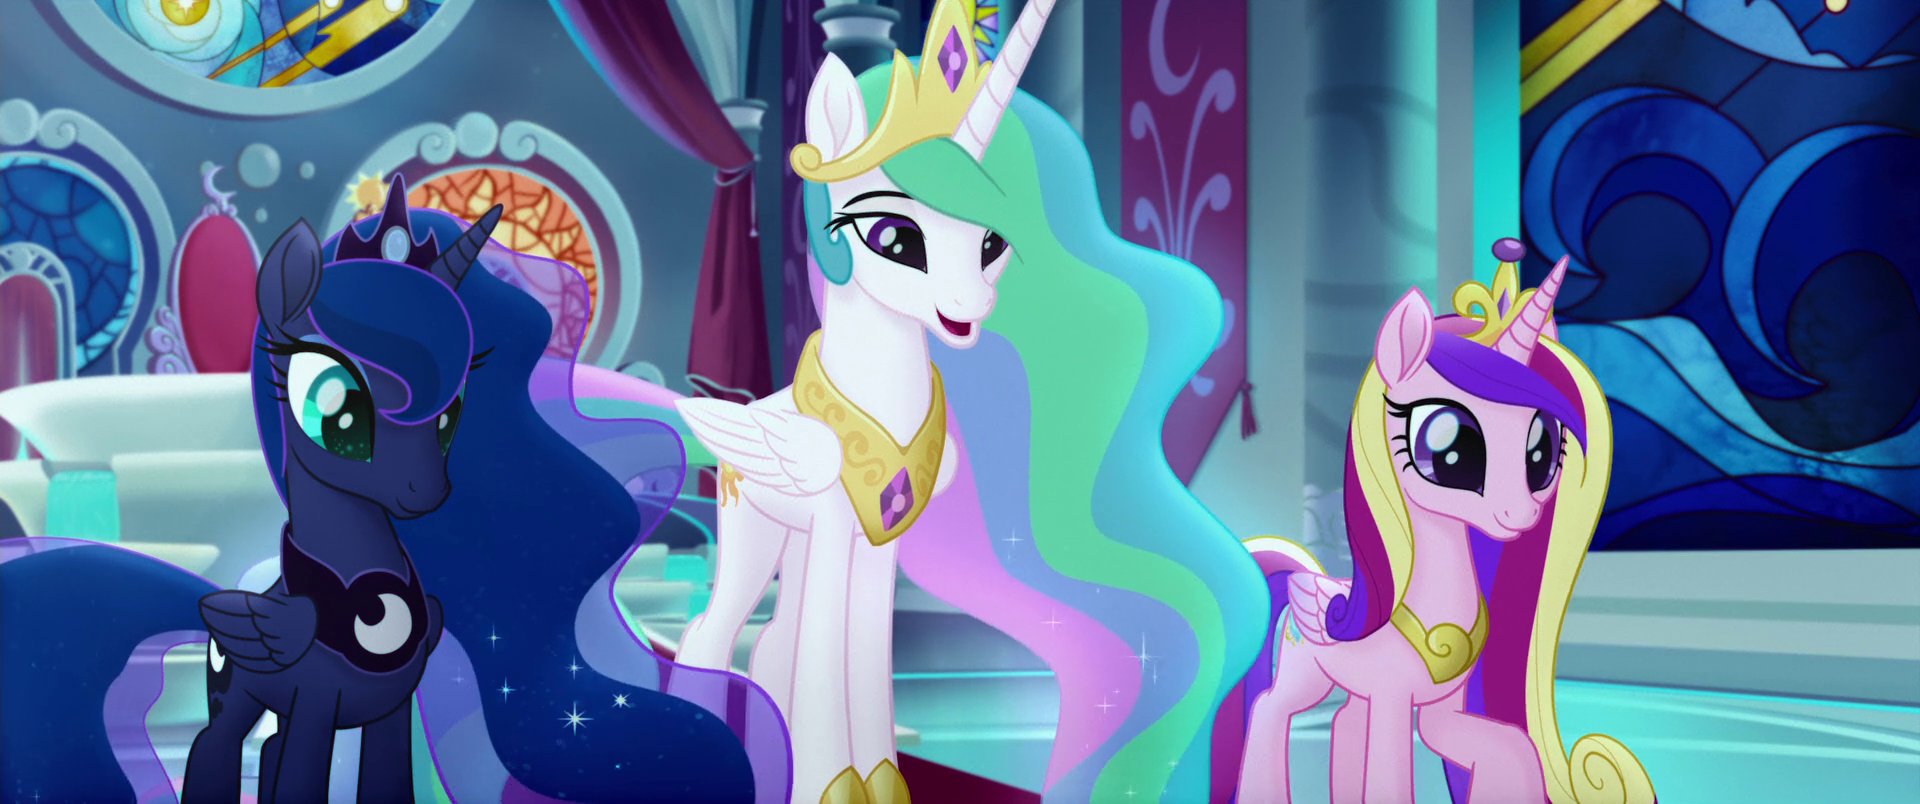 My Little Pony friendship is Magic meet Princess Celestia